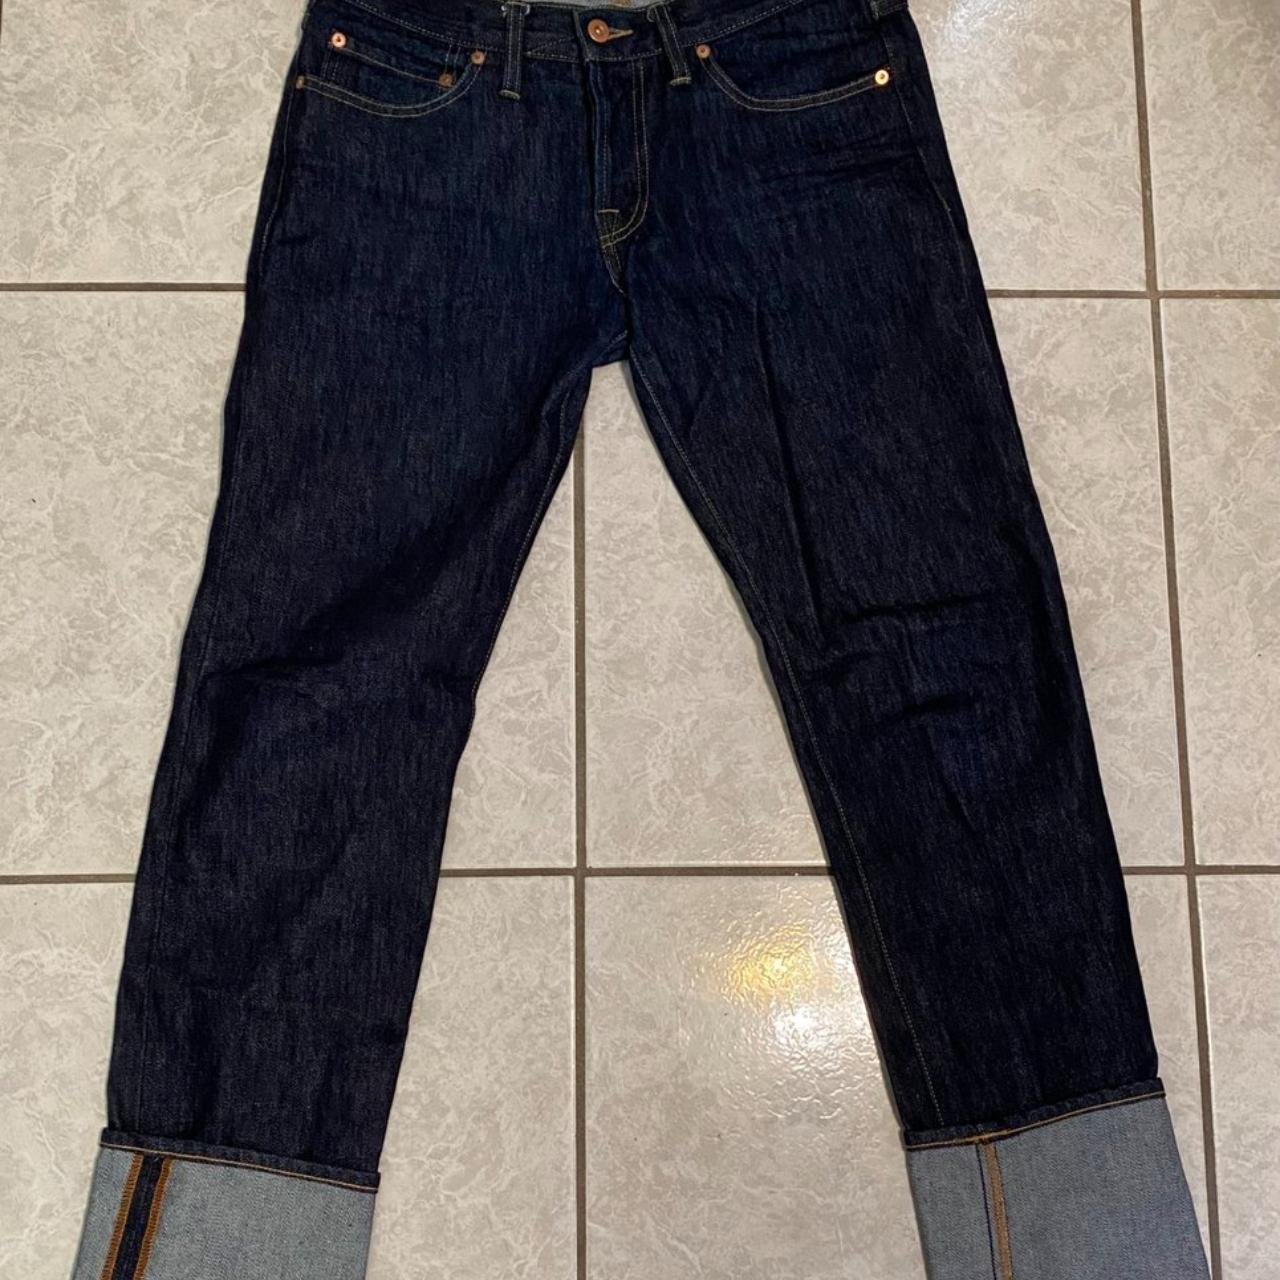 Tellason Stock Slim Tapered Jeans One pre-soak, one... - Depop